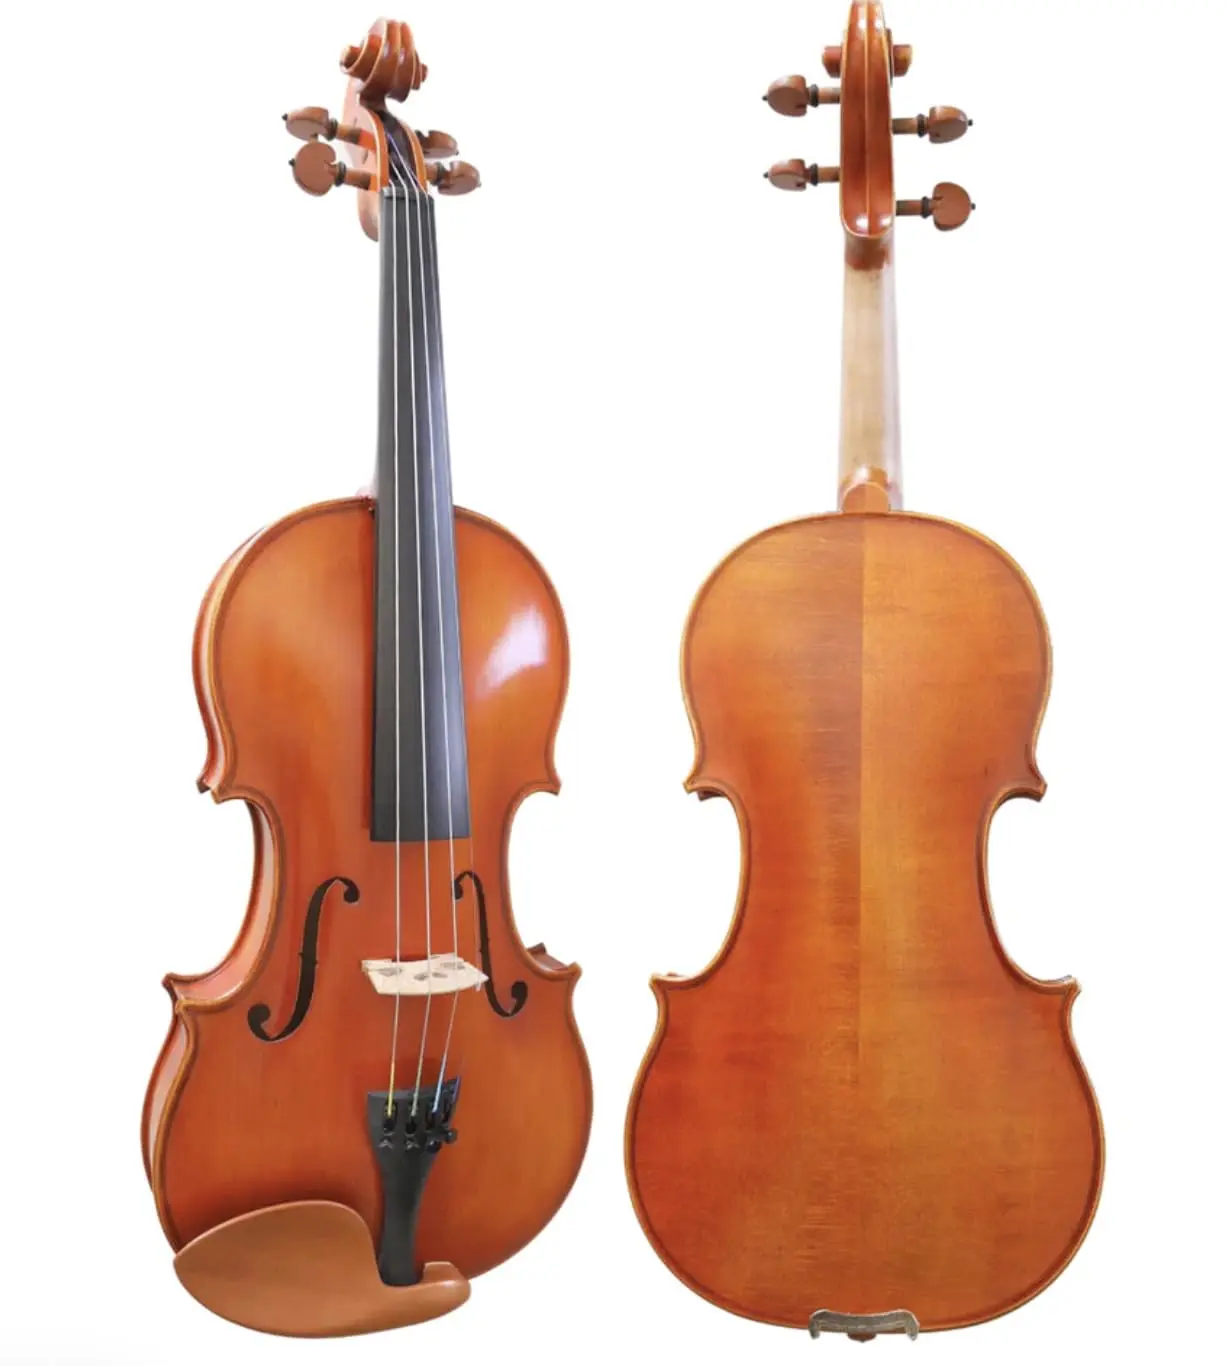 dz strad violin reviews - Where are Antonio Strad violins made